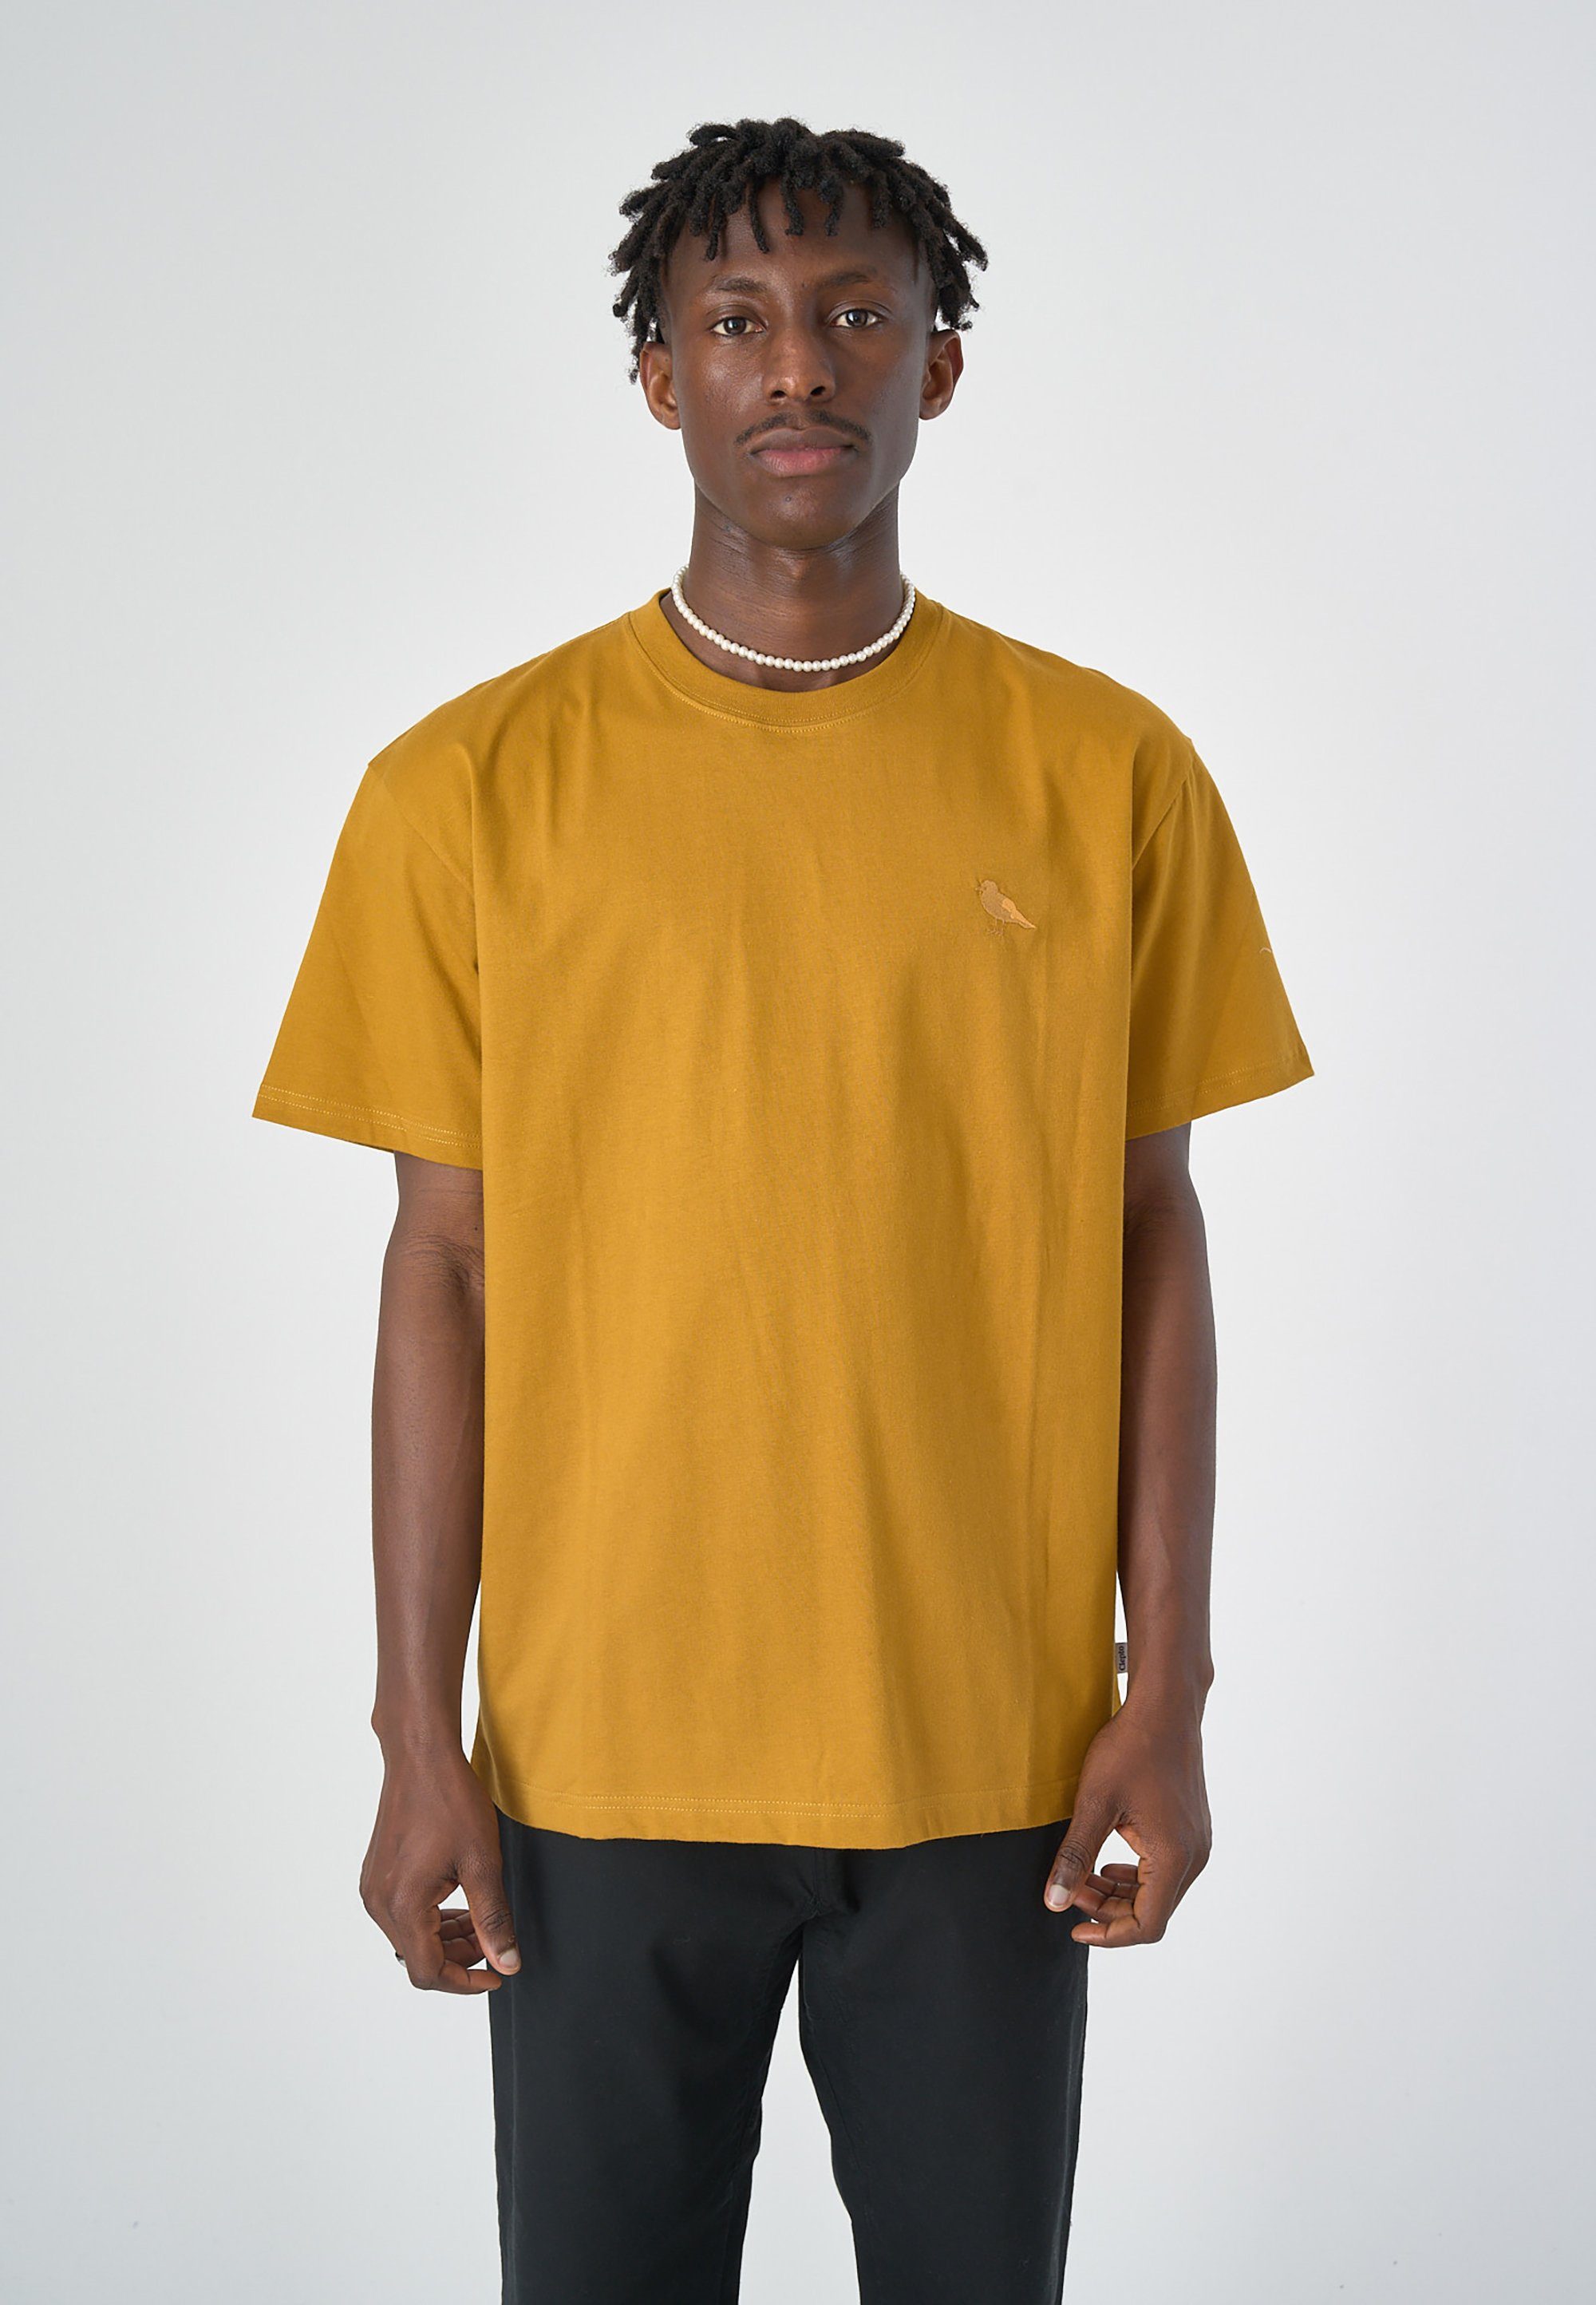 gelb Gull T-Shirt lockerem Mono Embroidery mit Cleptomanicx Schnitt